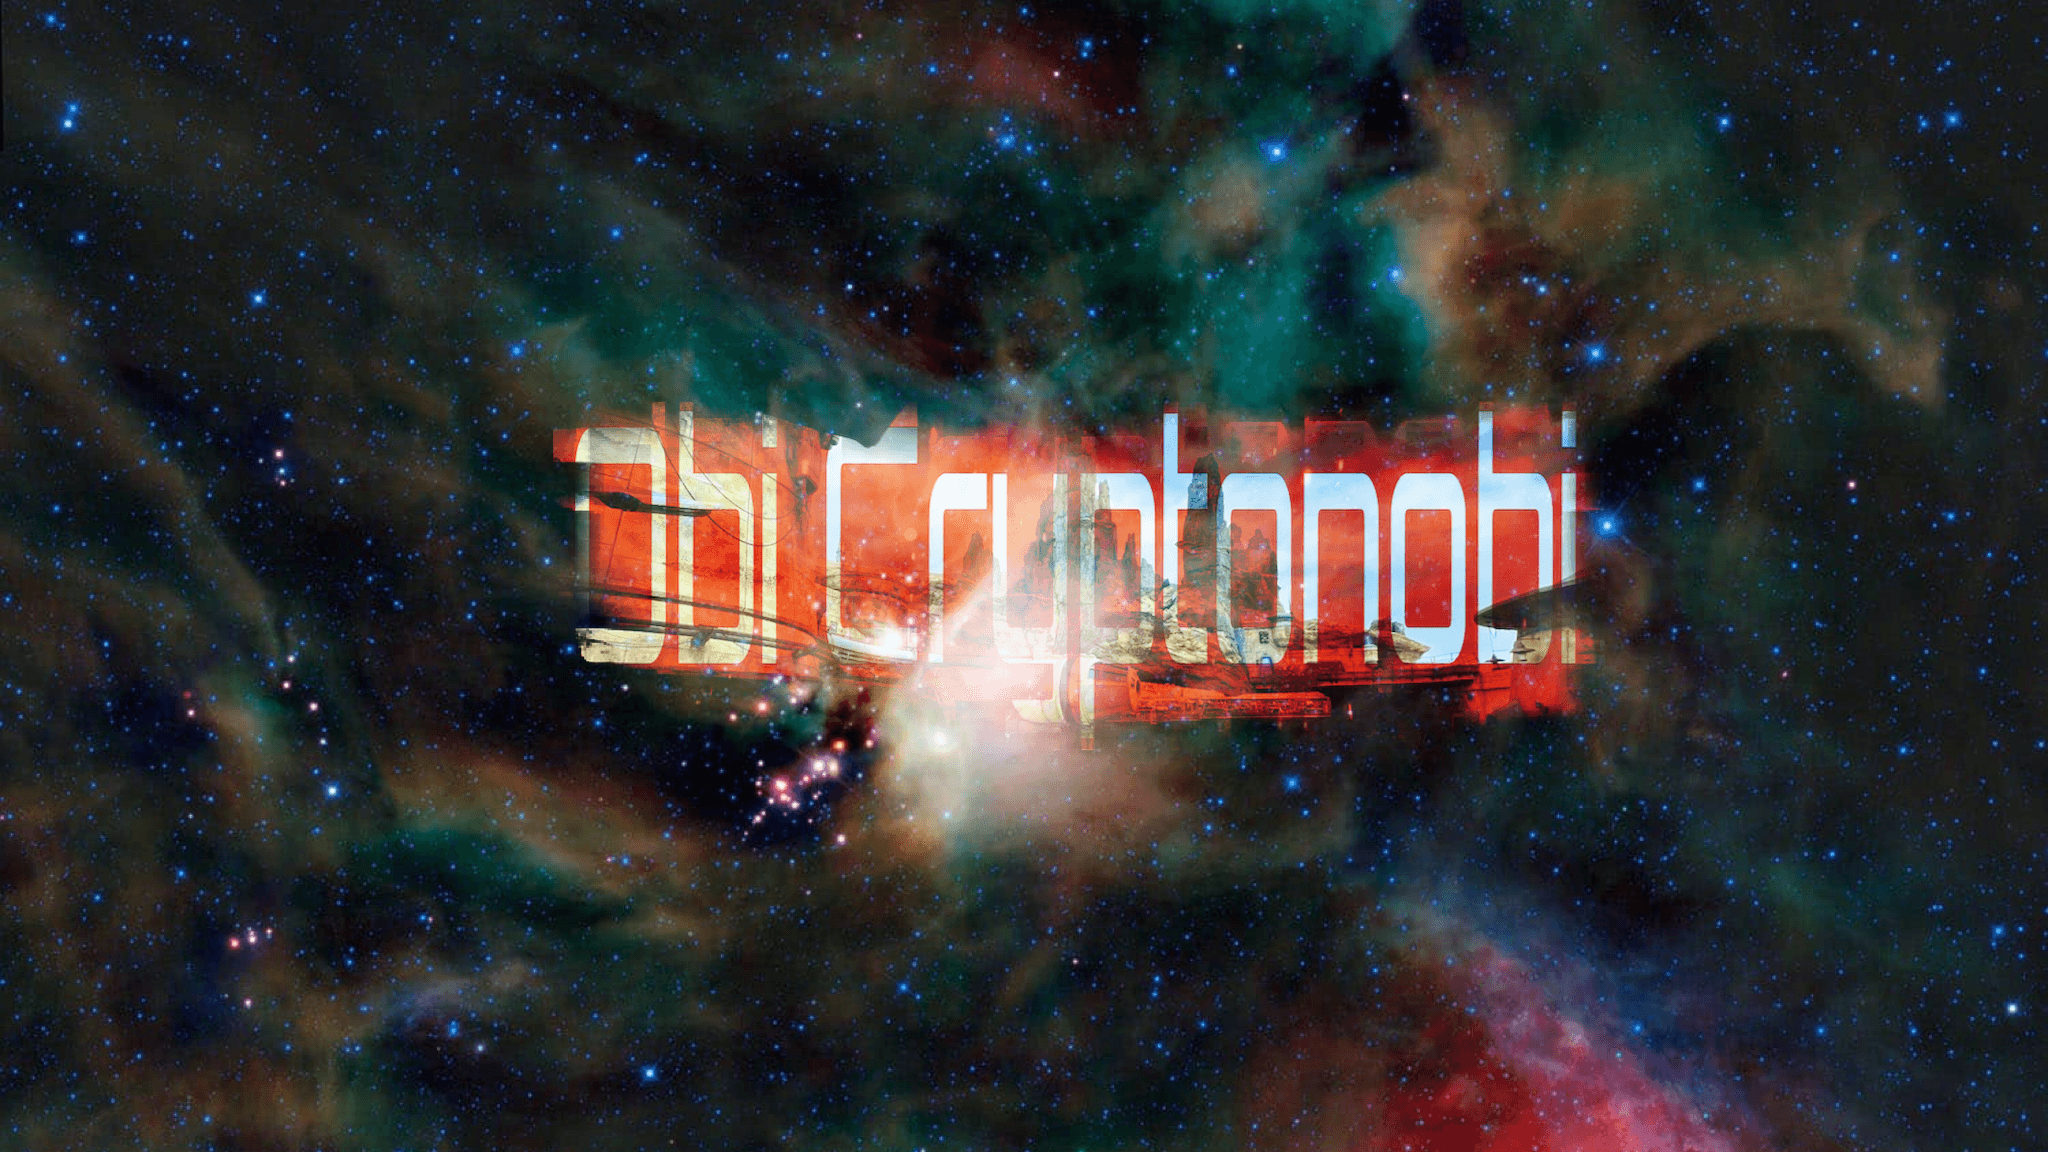 ObiCryptonobi banner